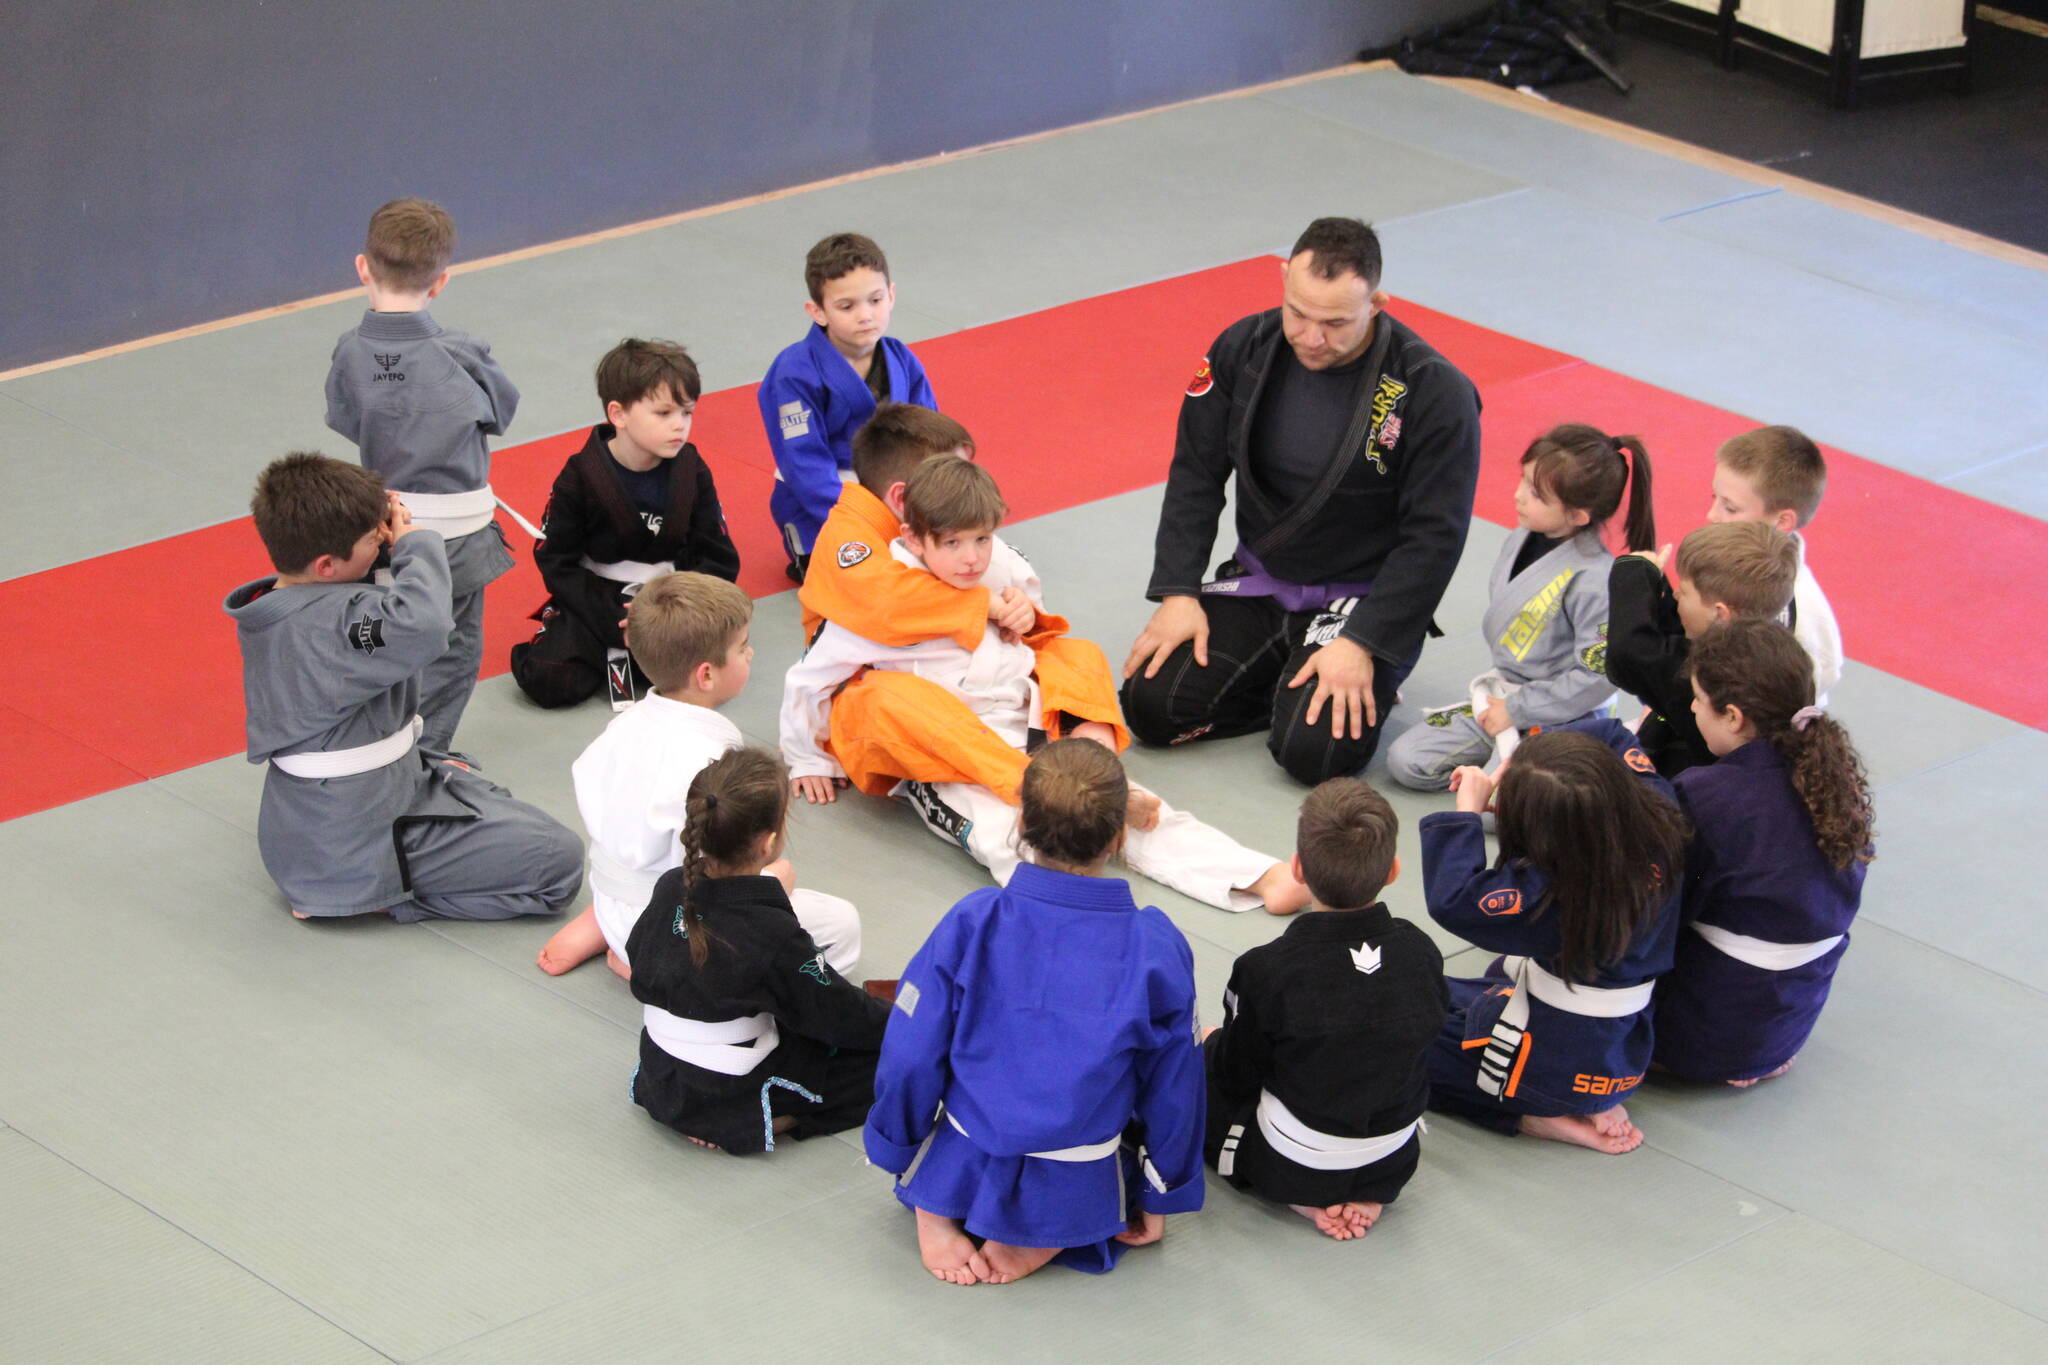 Photo by Karina Andrew/Whidbey News-Times
Jules VonDoom teaches the children’s Jiu Jitsu class.